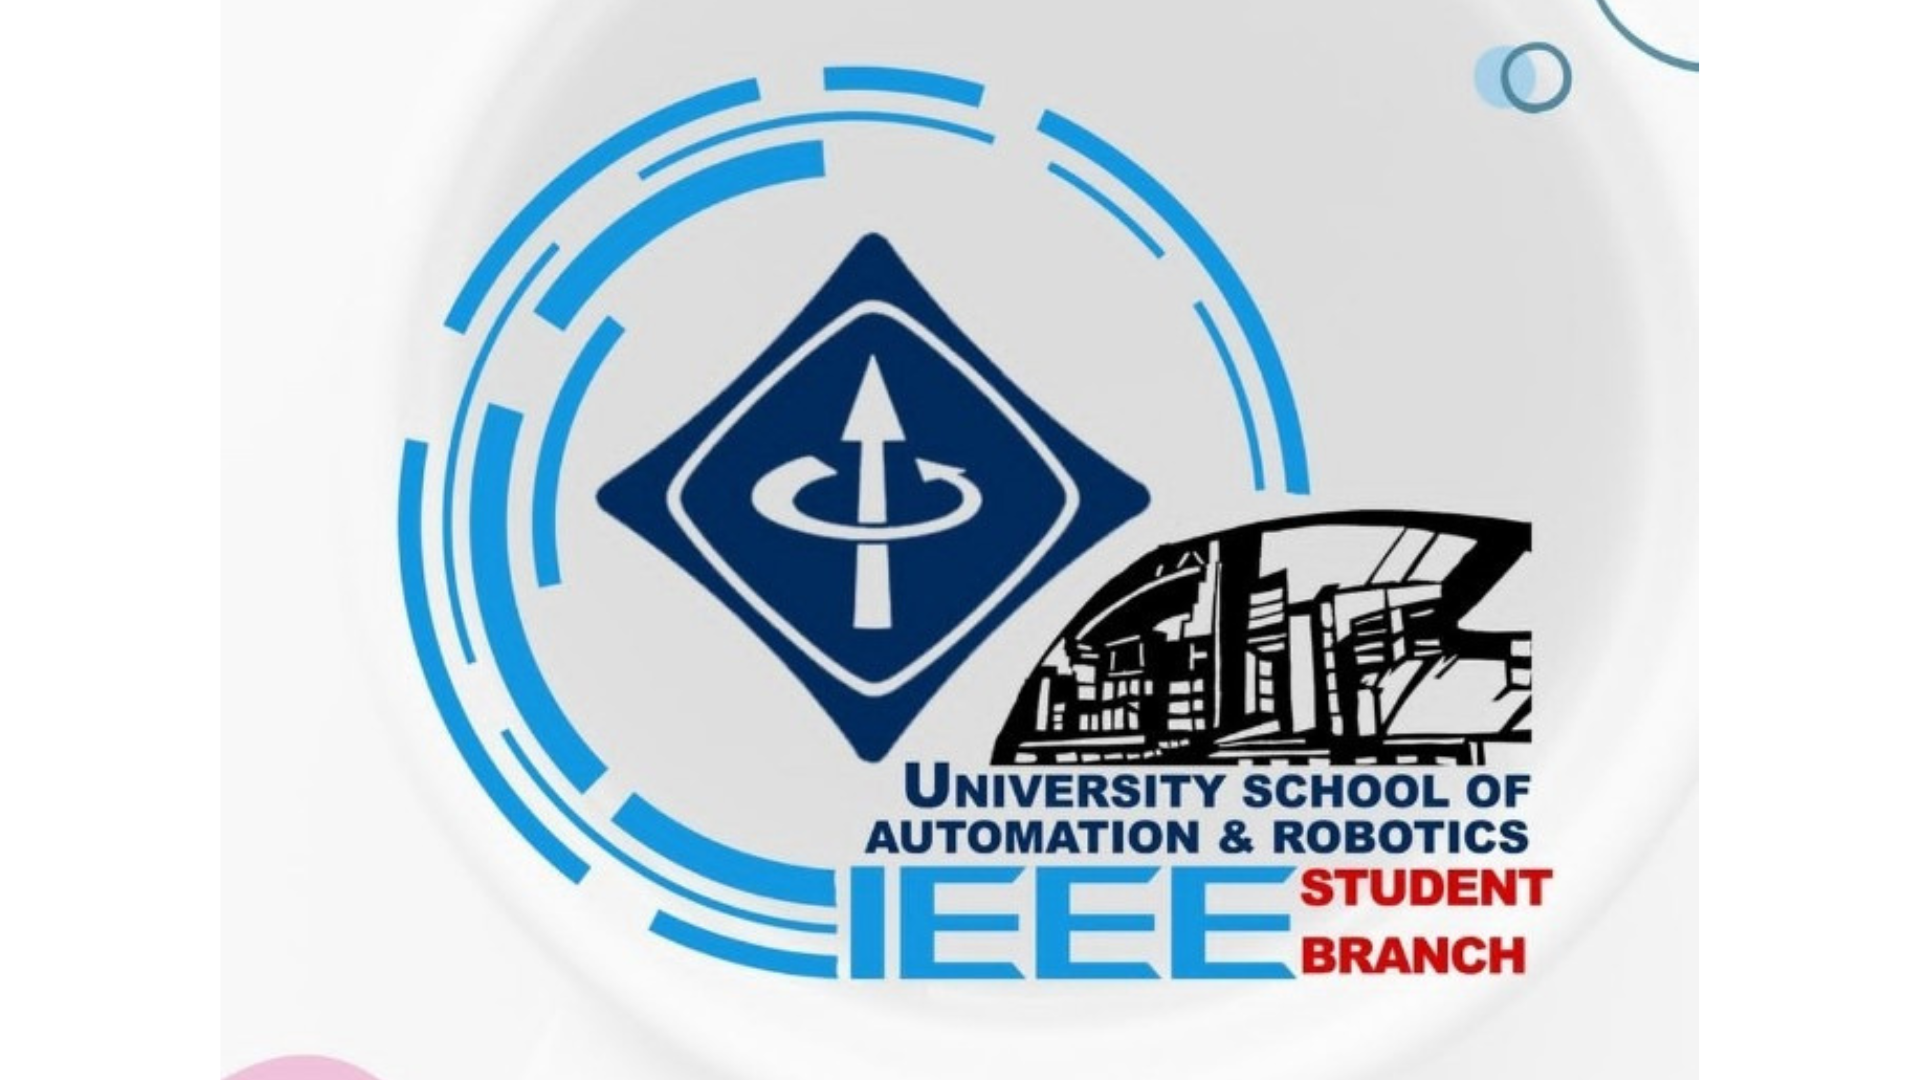 IEEE-USAR LOGO